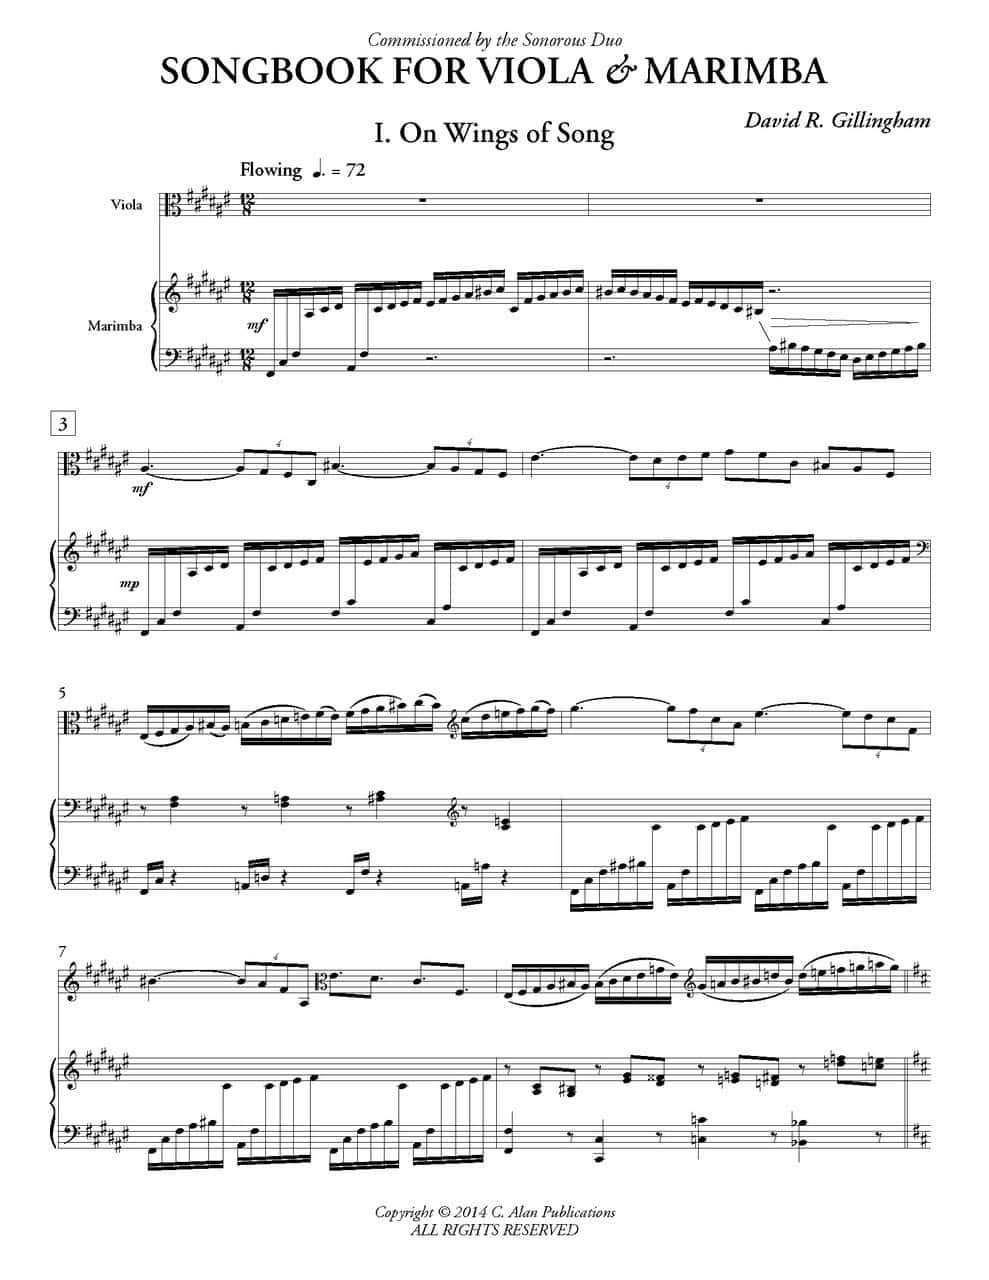 Songbook for Viola & Marimba by David Gillingham